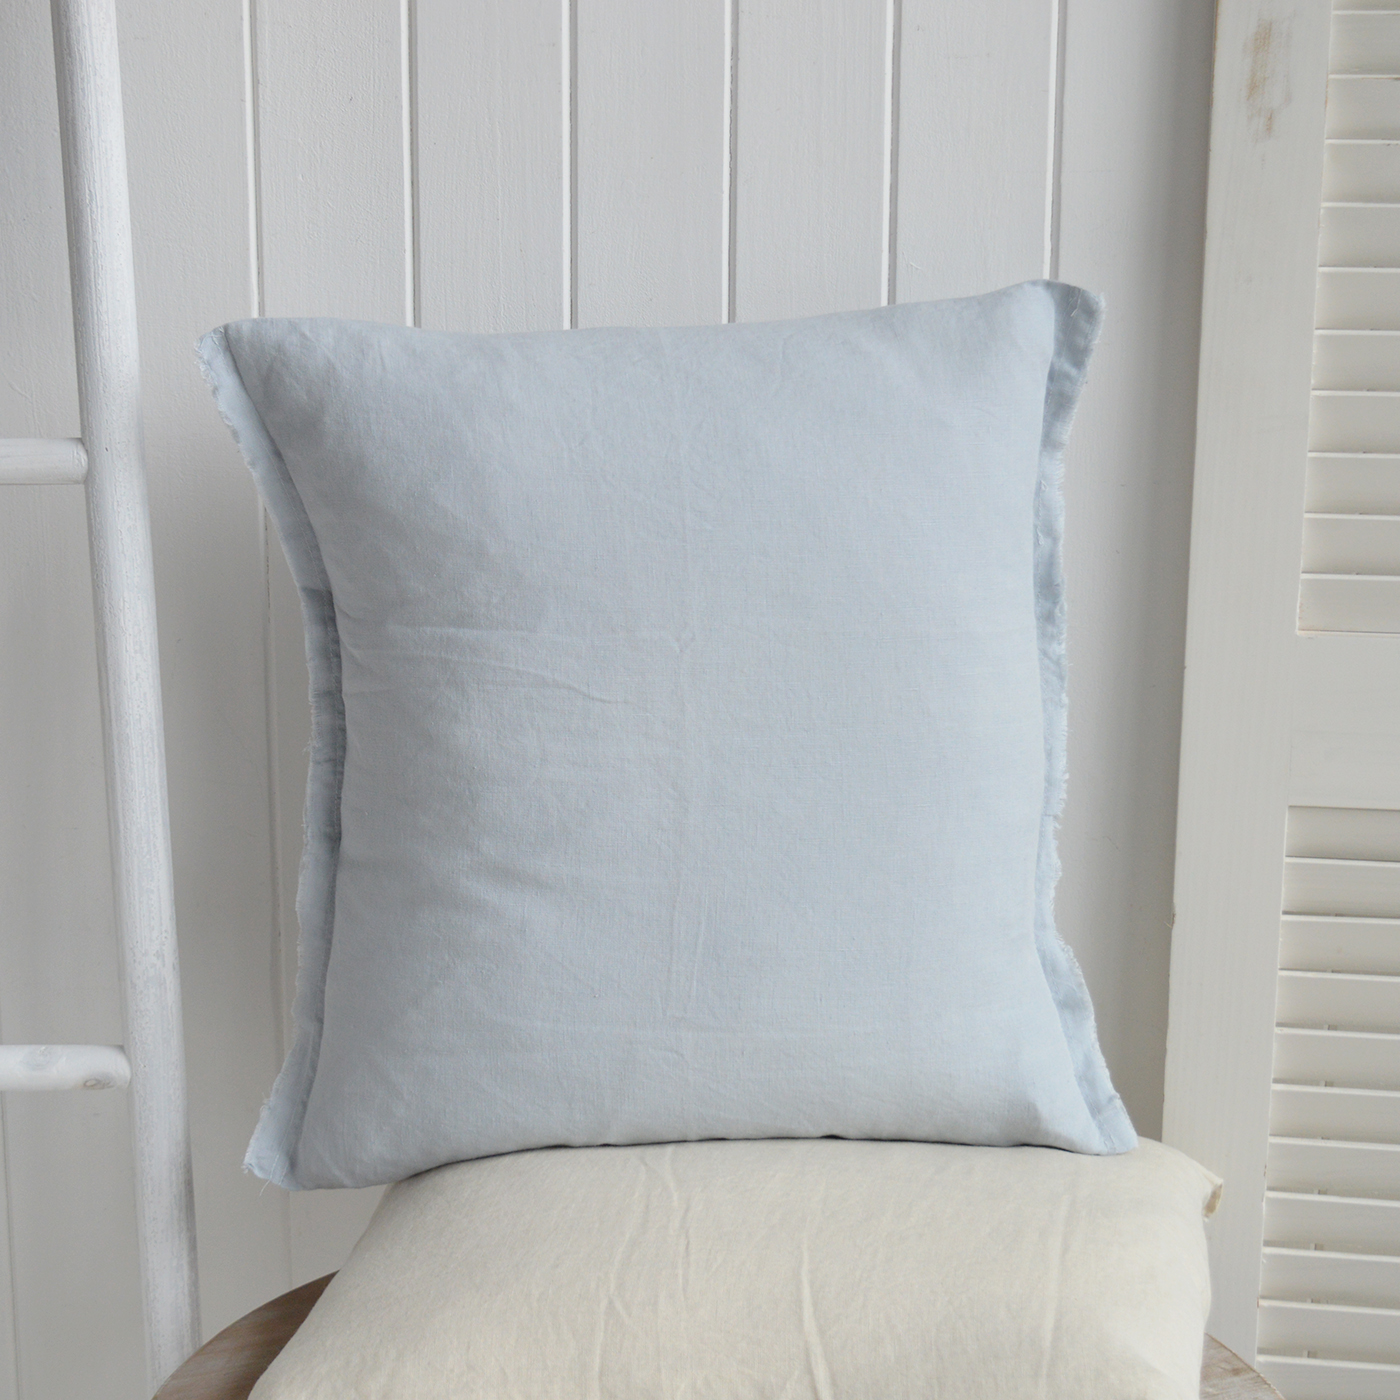 New England cushions and soft furnishings. Hamilton 100% Linen Cushion Covers for coastal, beach house and modern farmhouse interiors - dusty blue